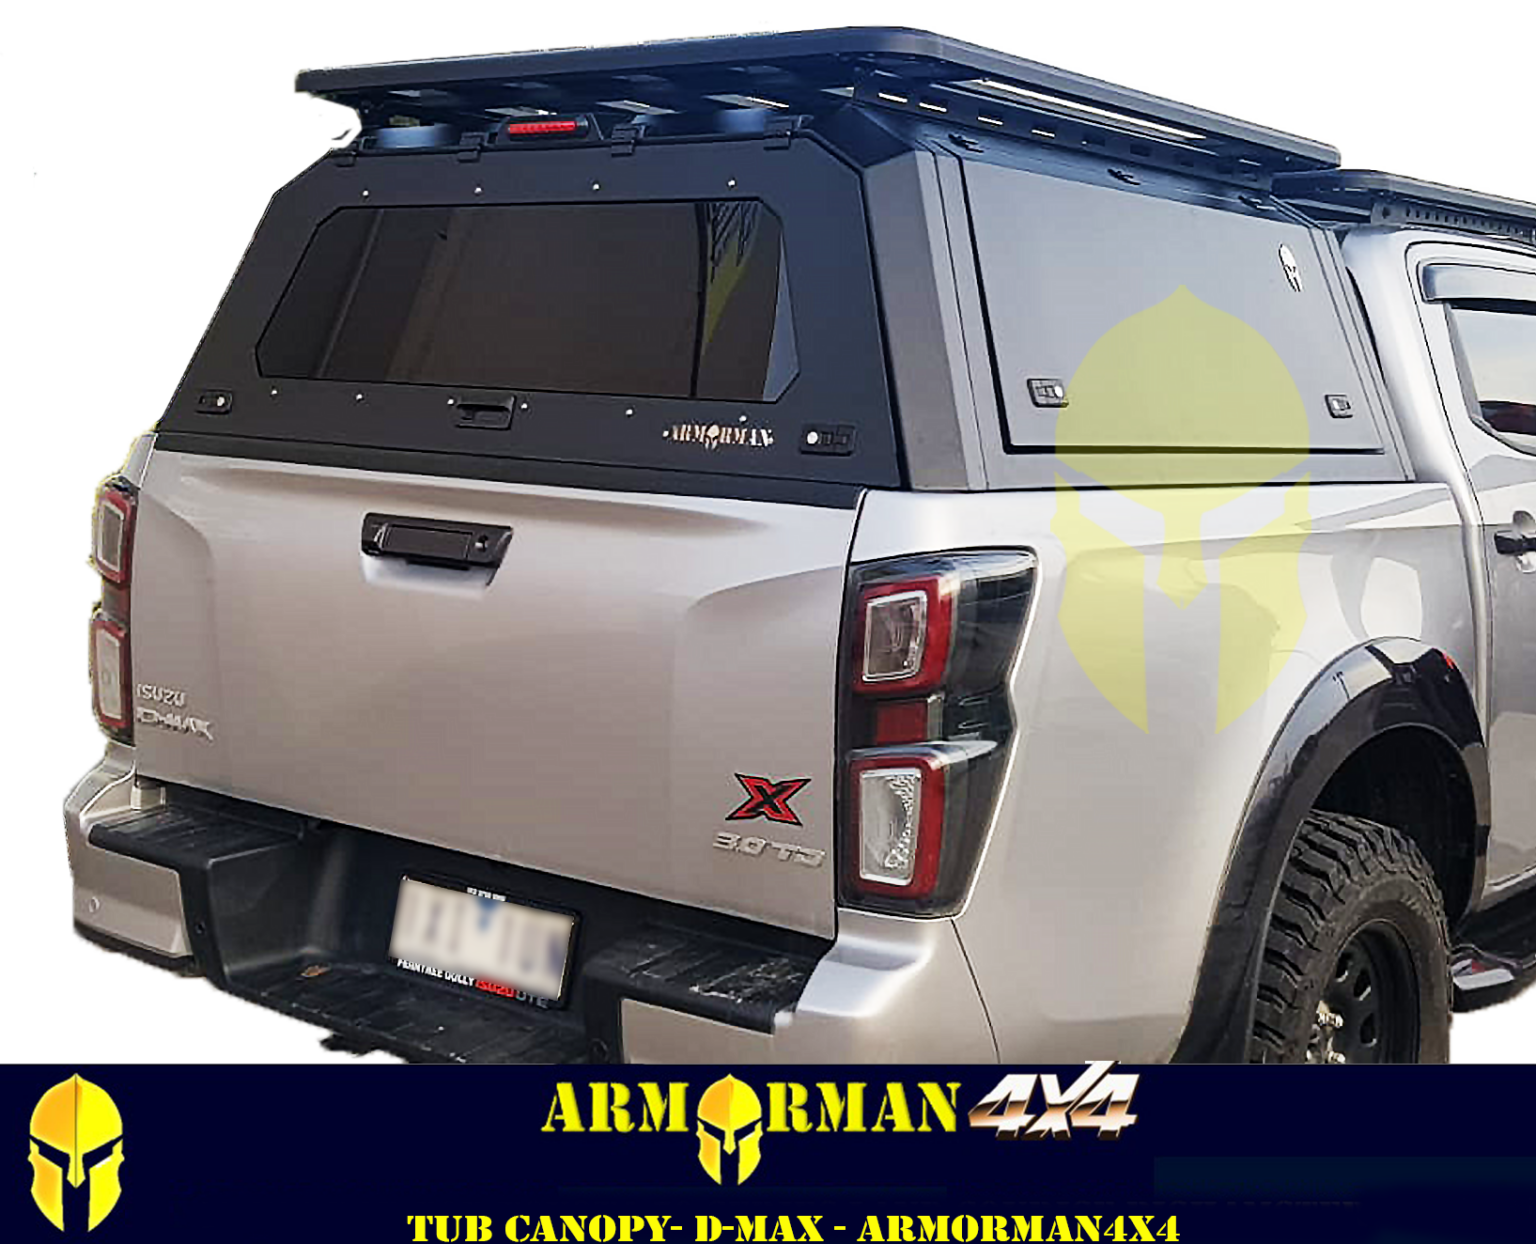 Tub canopy - D-Max-ARMORMAN4X4 - Armorman 4x4